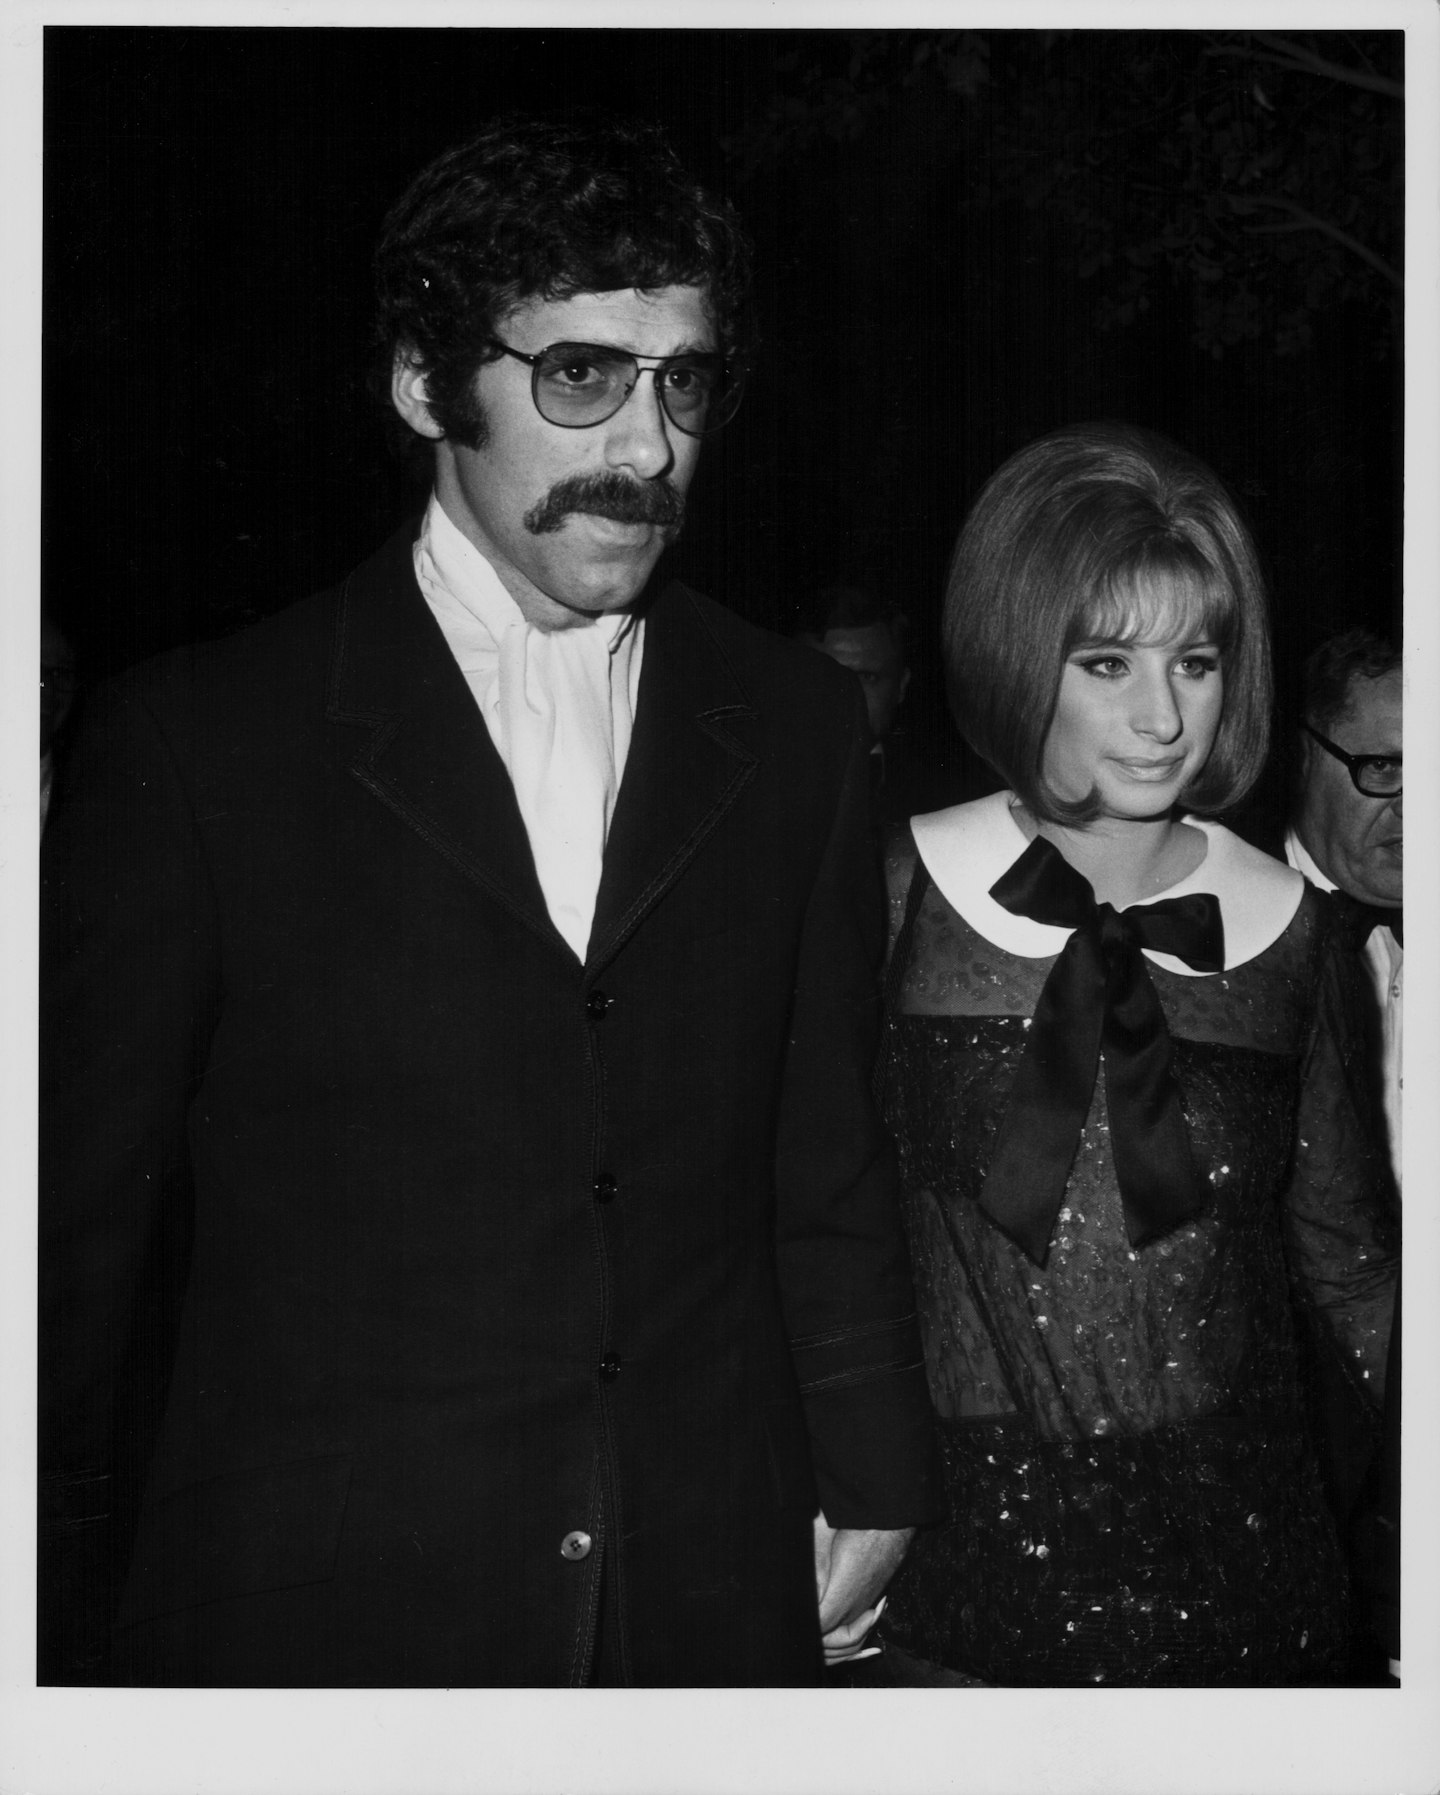 1970 – Barbara Streisand and Elliot Gould